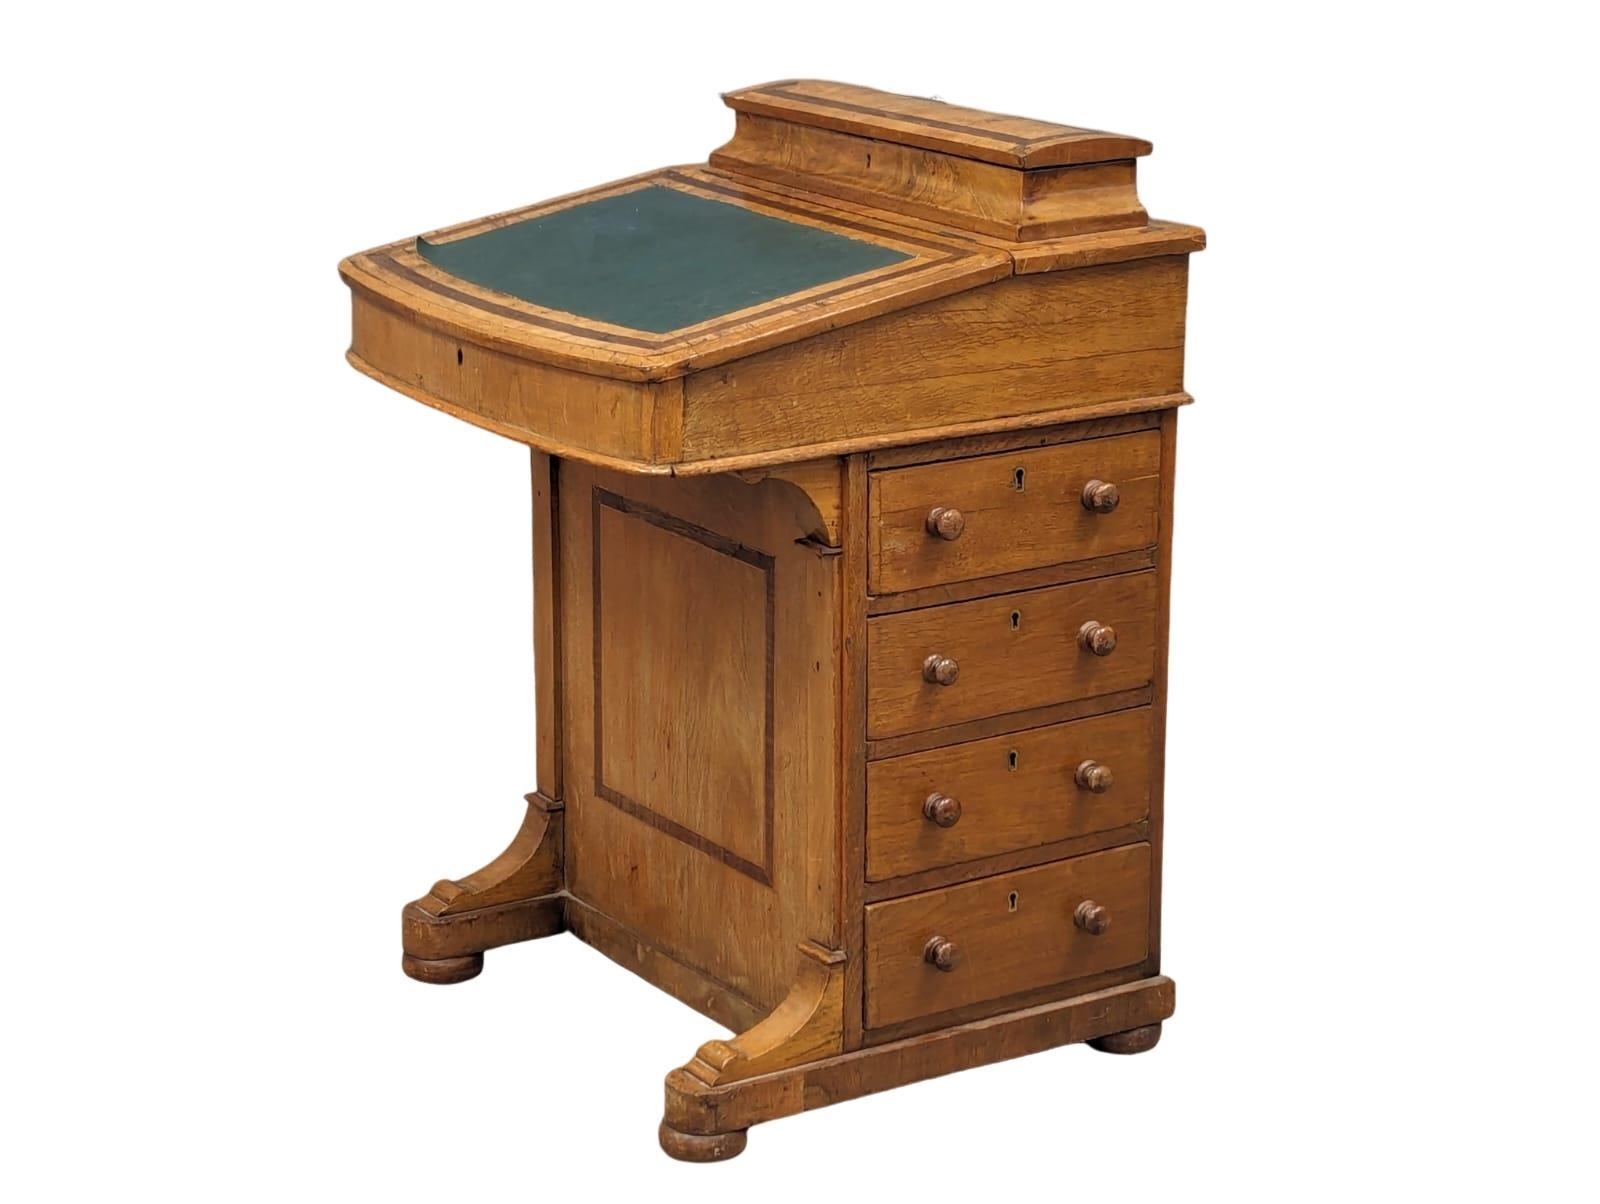 A Victorian walnut Davenport desk with maple interior.